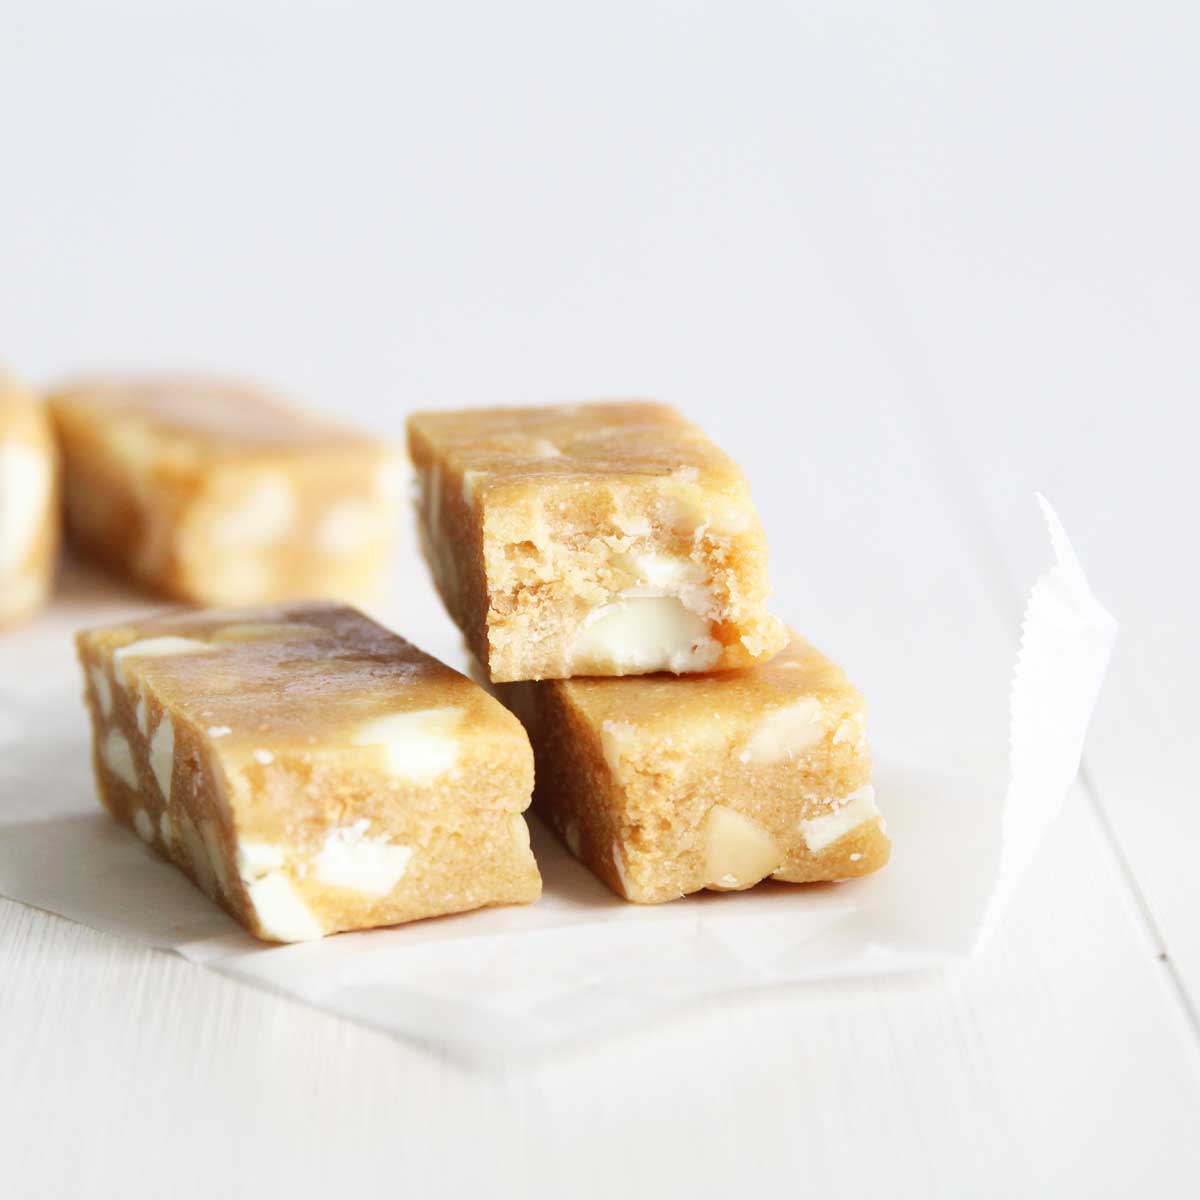 Chunky White Chocolate Macadamia Protein Bars Recipe (made with Collagen Peptides) - Pistachio Nice Cream